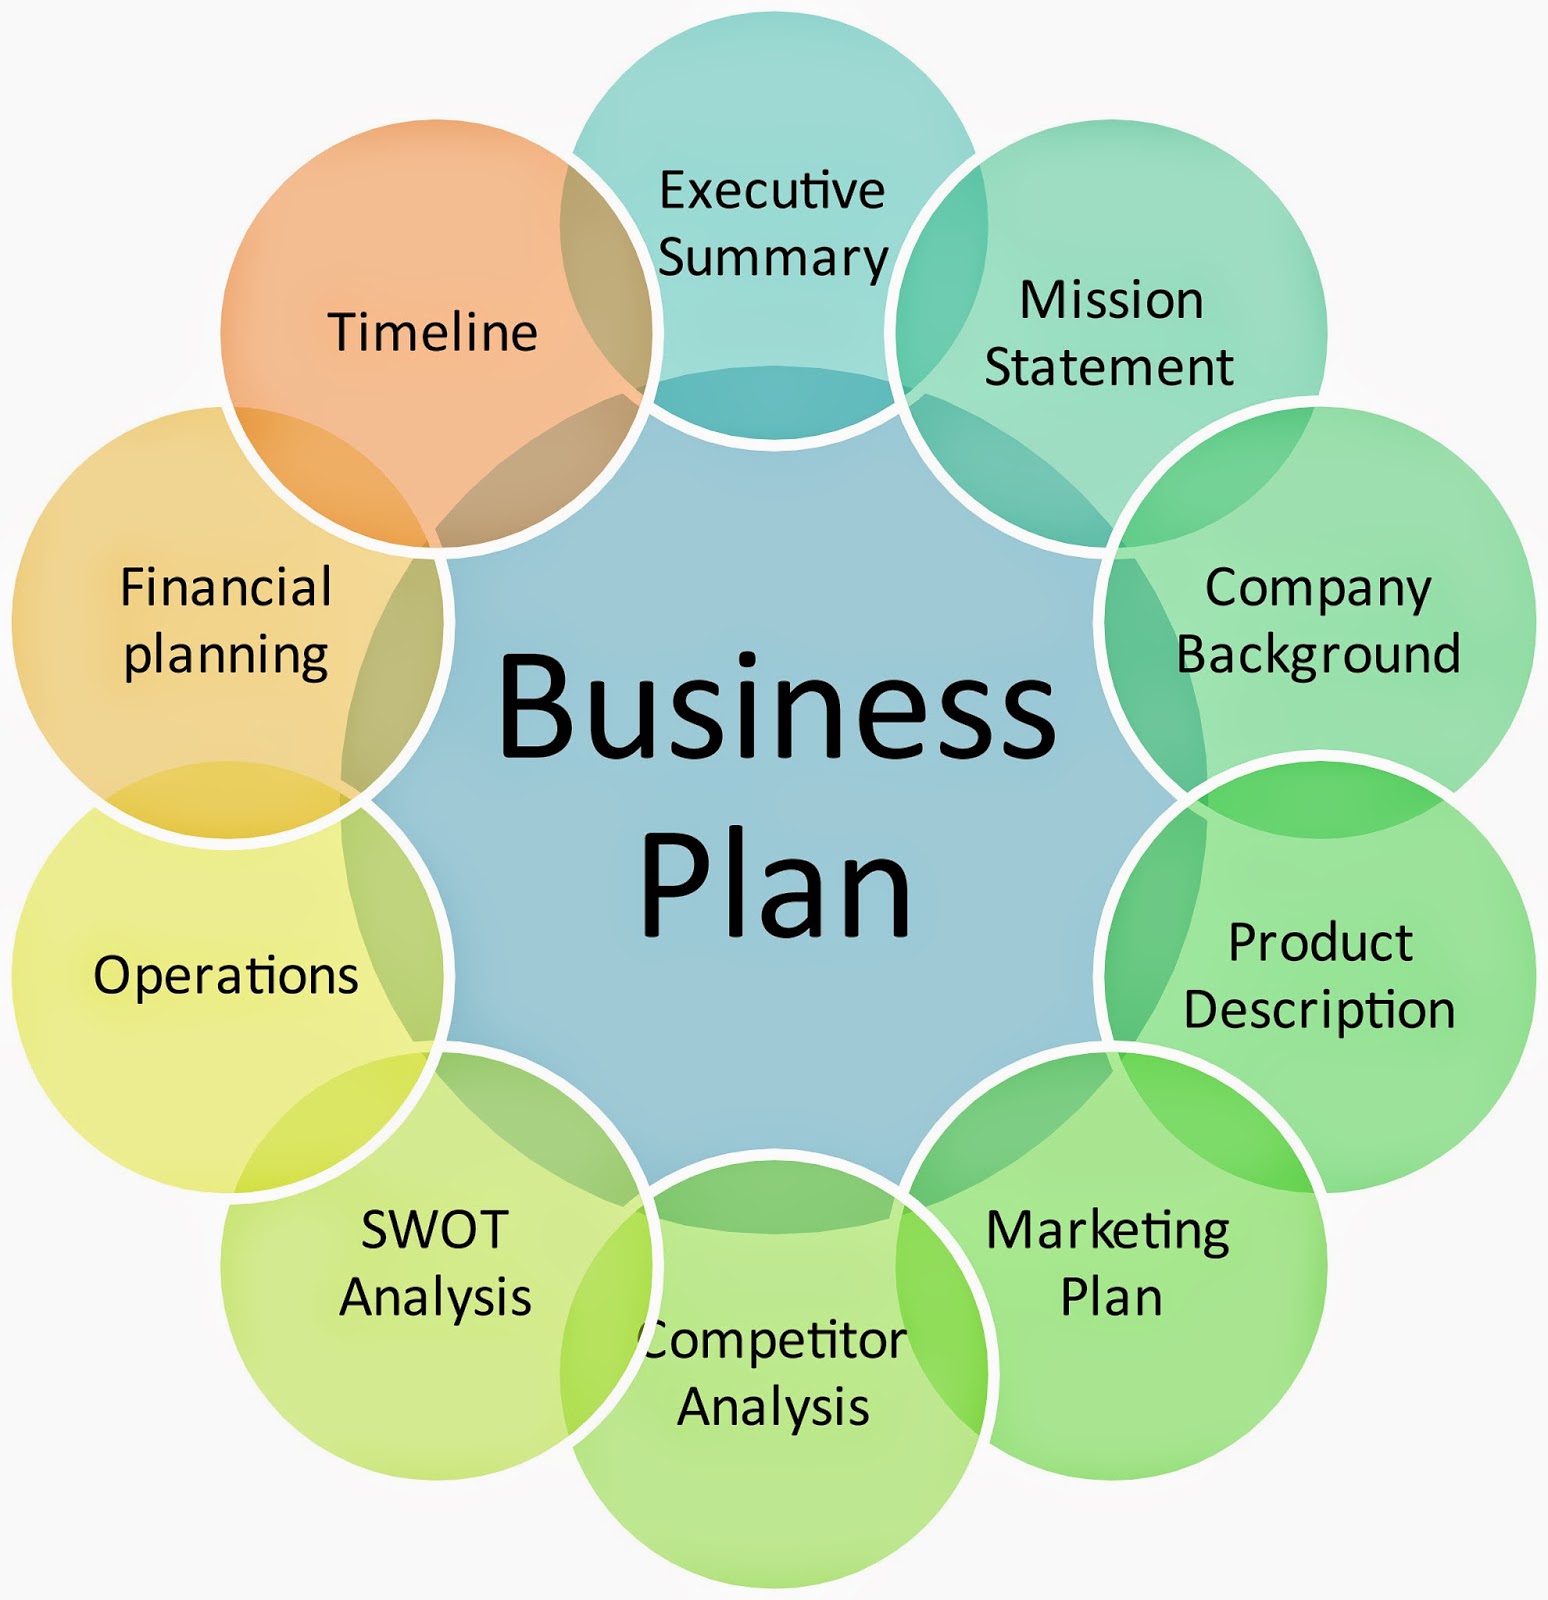 bisnis strategi bisnis adalah strategi bisnis online strategi bisnis 